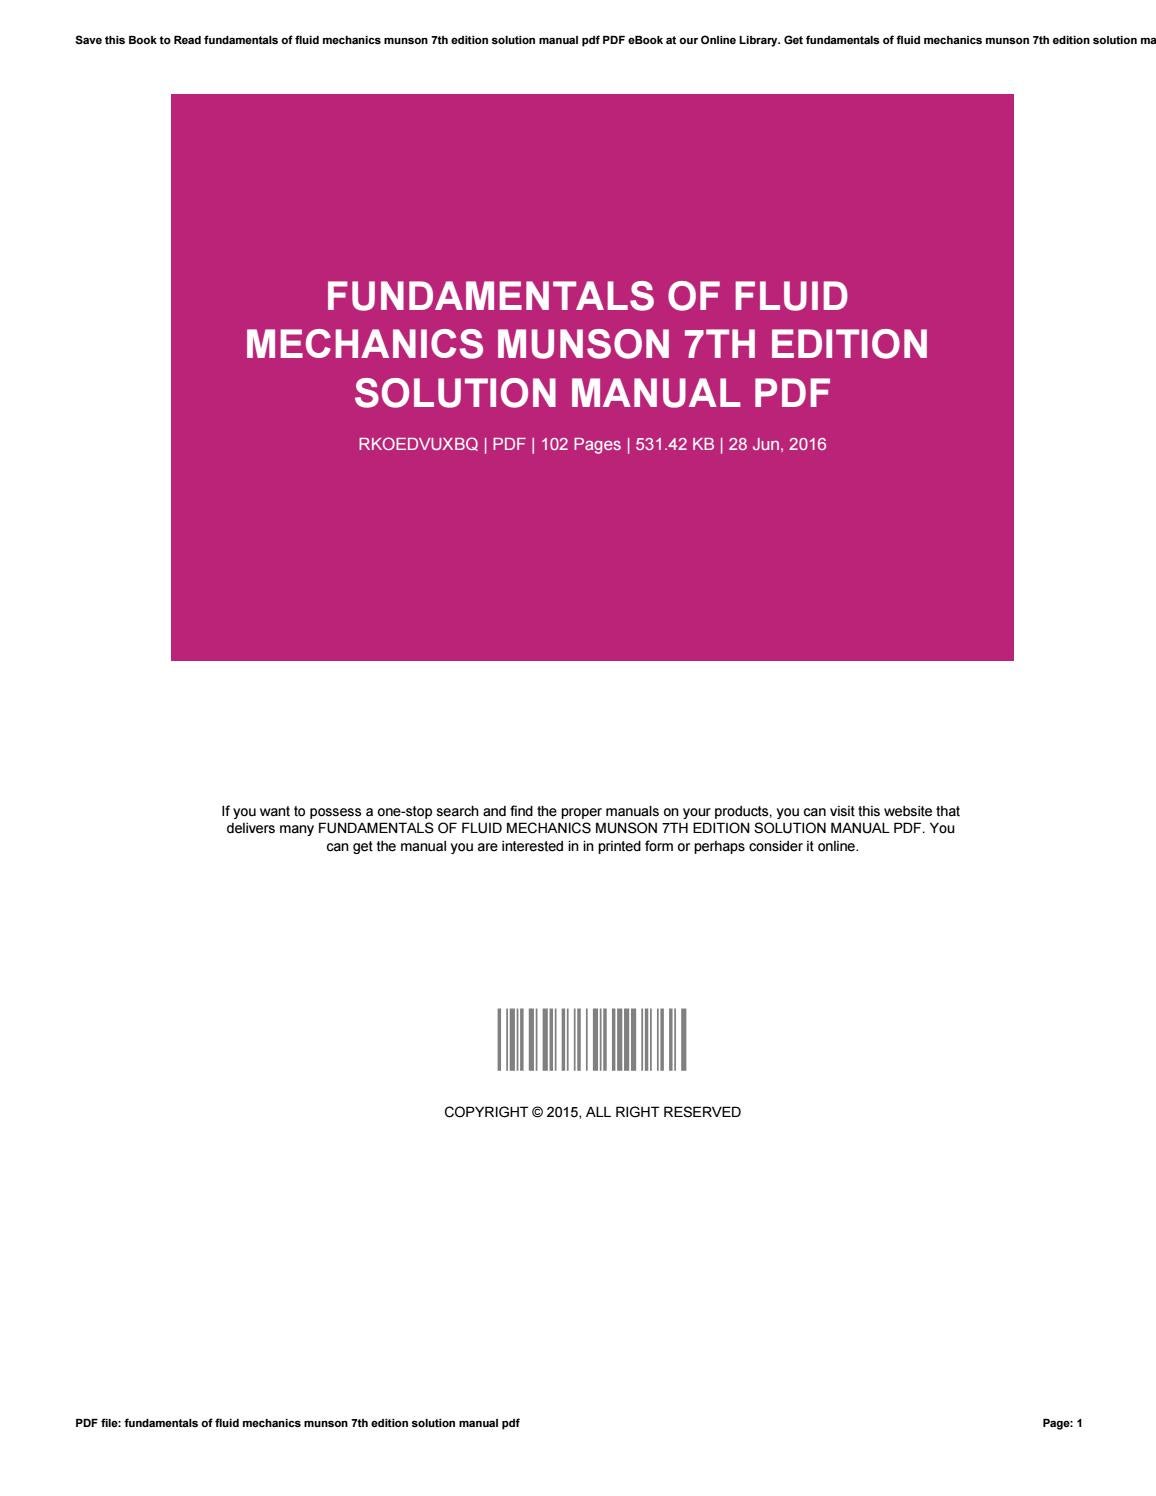 mechanics of machines solution manual pdf